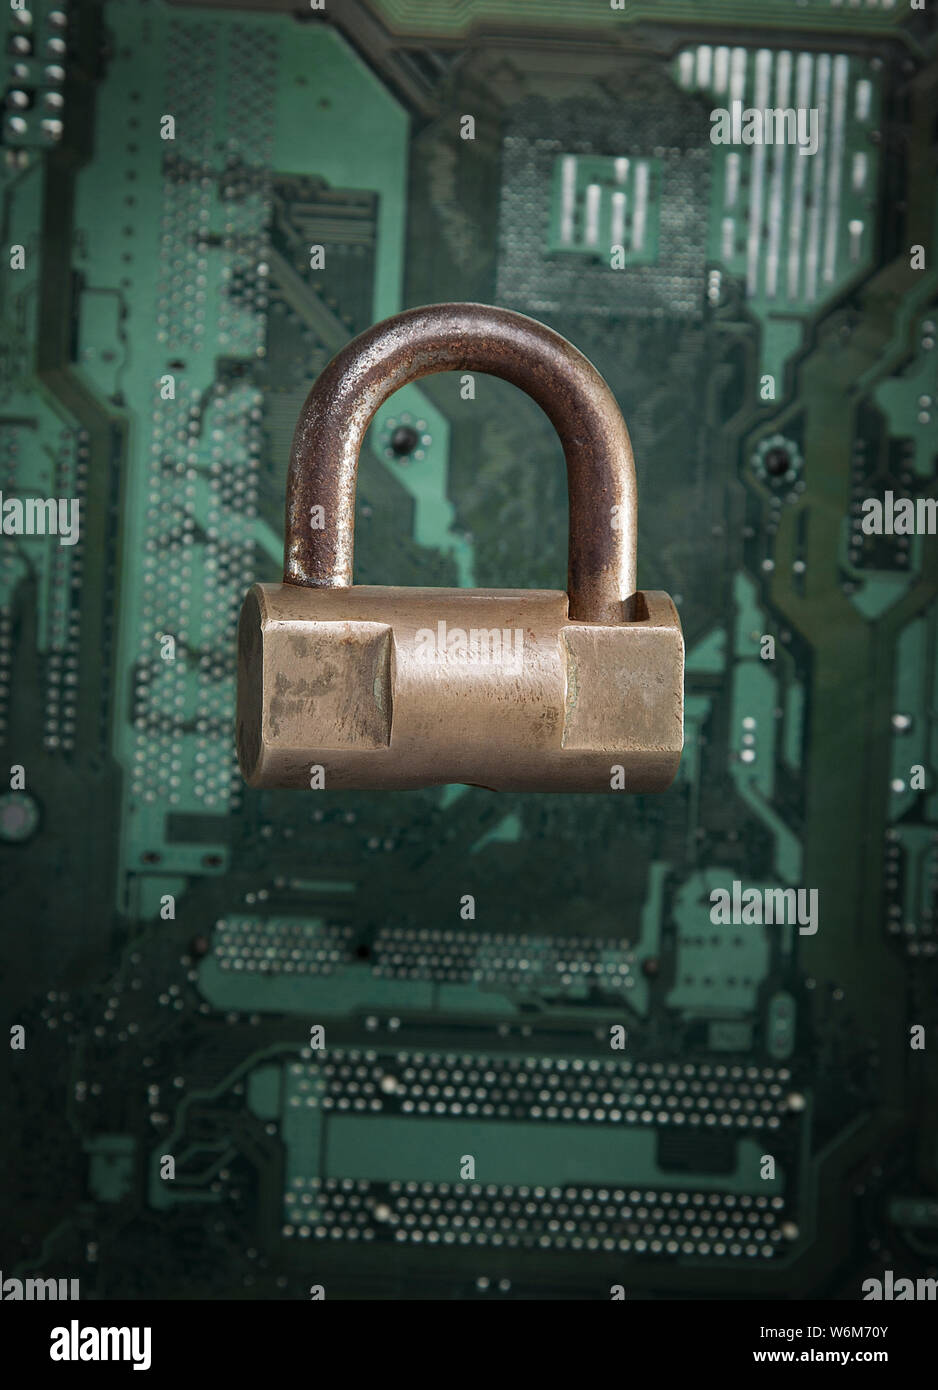 Lock Auf Dem Motherboard Internet Datenschutz Information Security Konzept Internetkriminalitat Konzept Stockfotografie Alamy